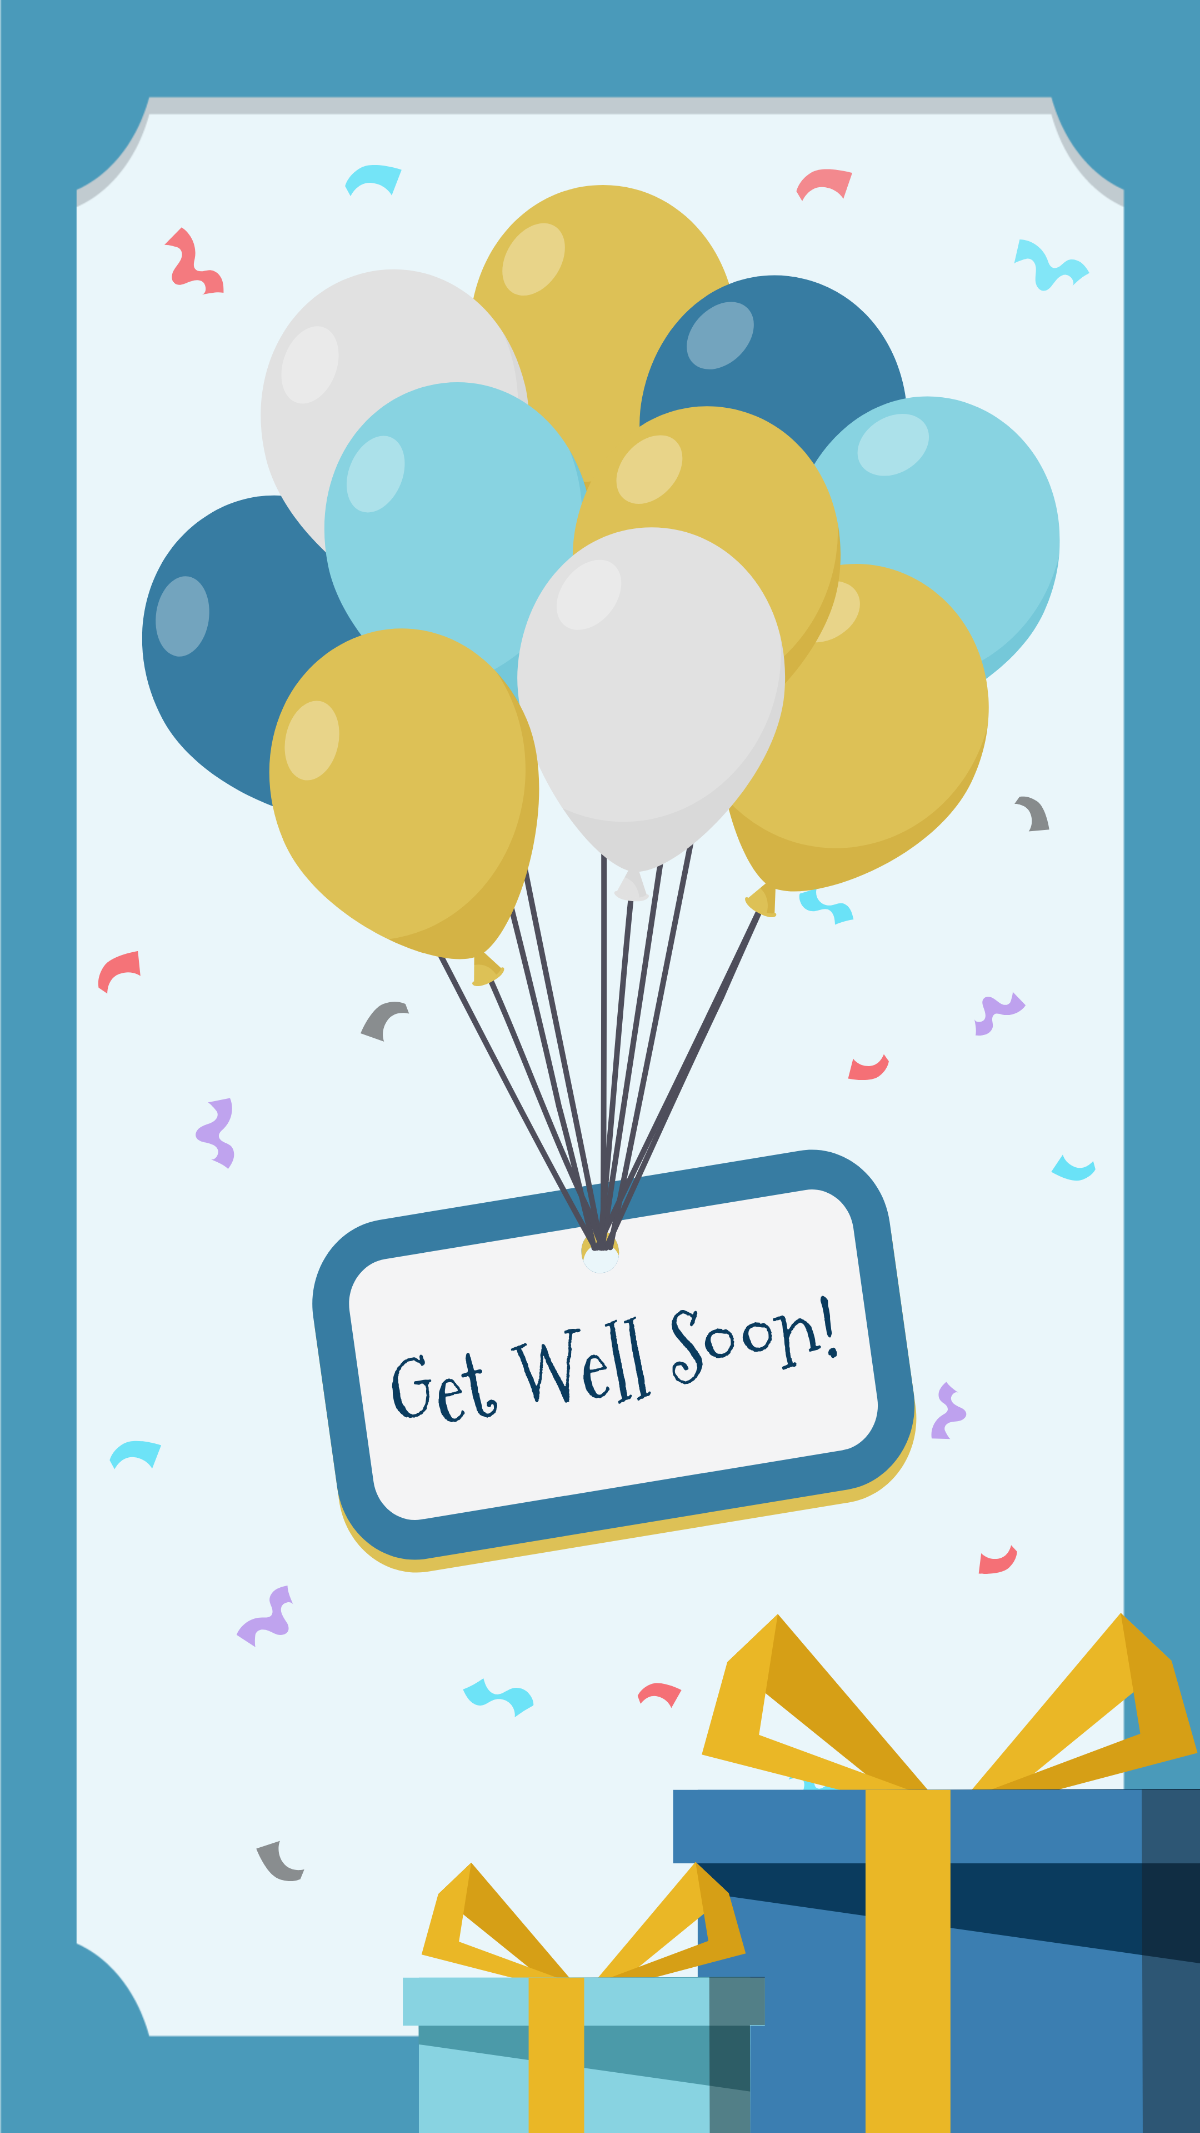 Get Well Soon Balloons Pop Up Card Template